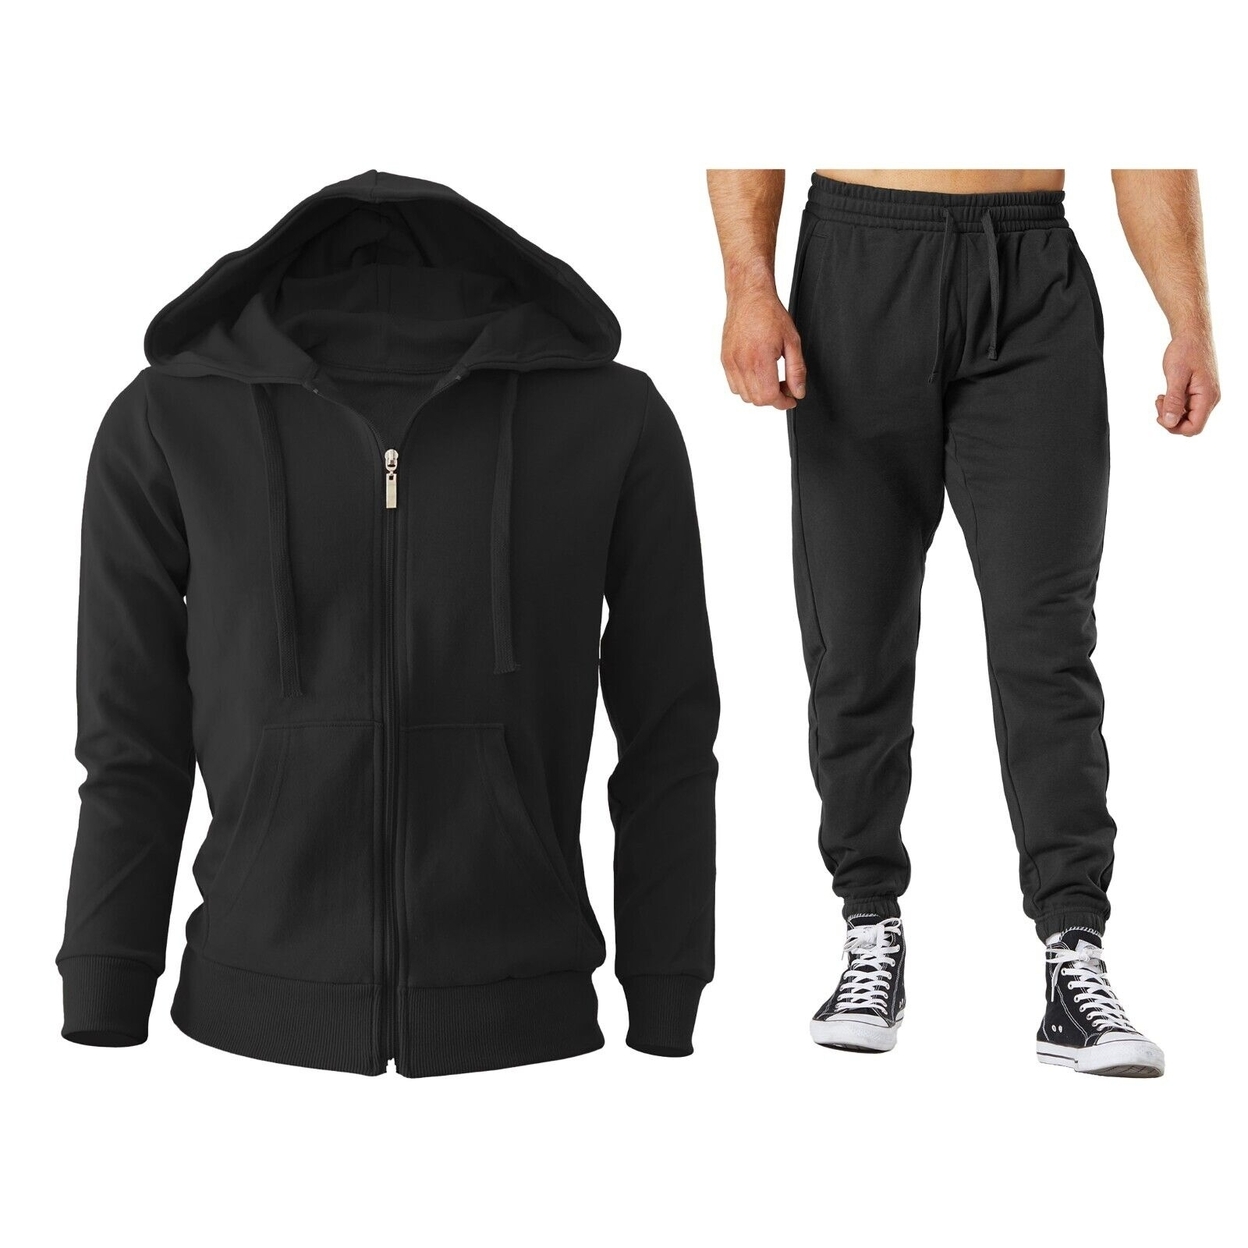 2/4-Piece: Men's Winter Warm Cozy Athletic Multi-Pockets BIG & TALL Sweatsuit Set - Black, 2, Medium